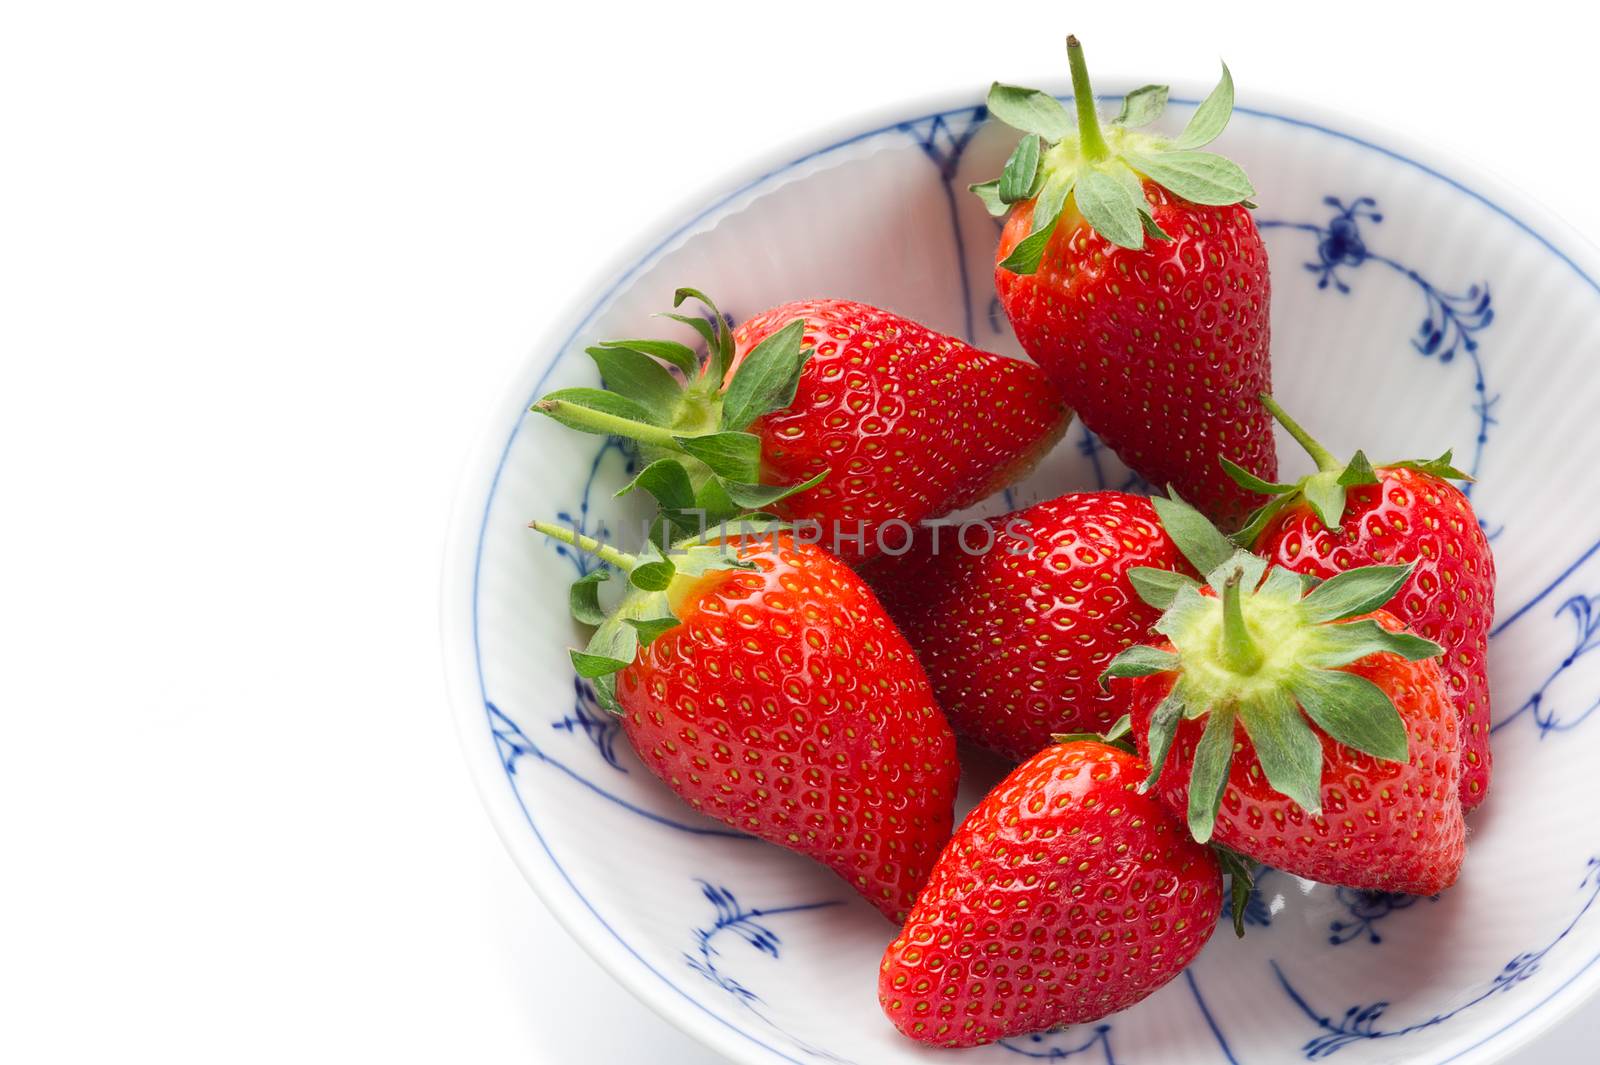 Fresh strawberries to be served as healthy snack by MOELLERTHOMSEN